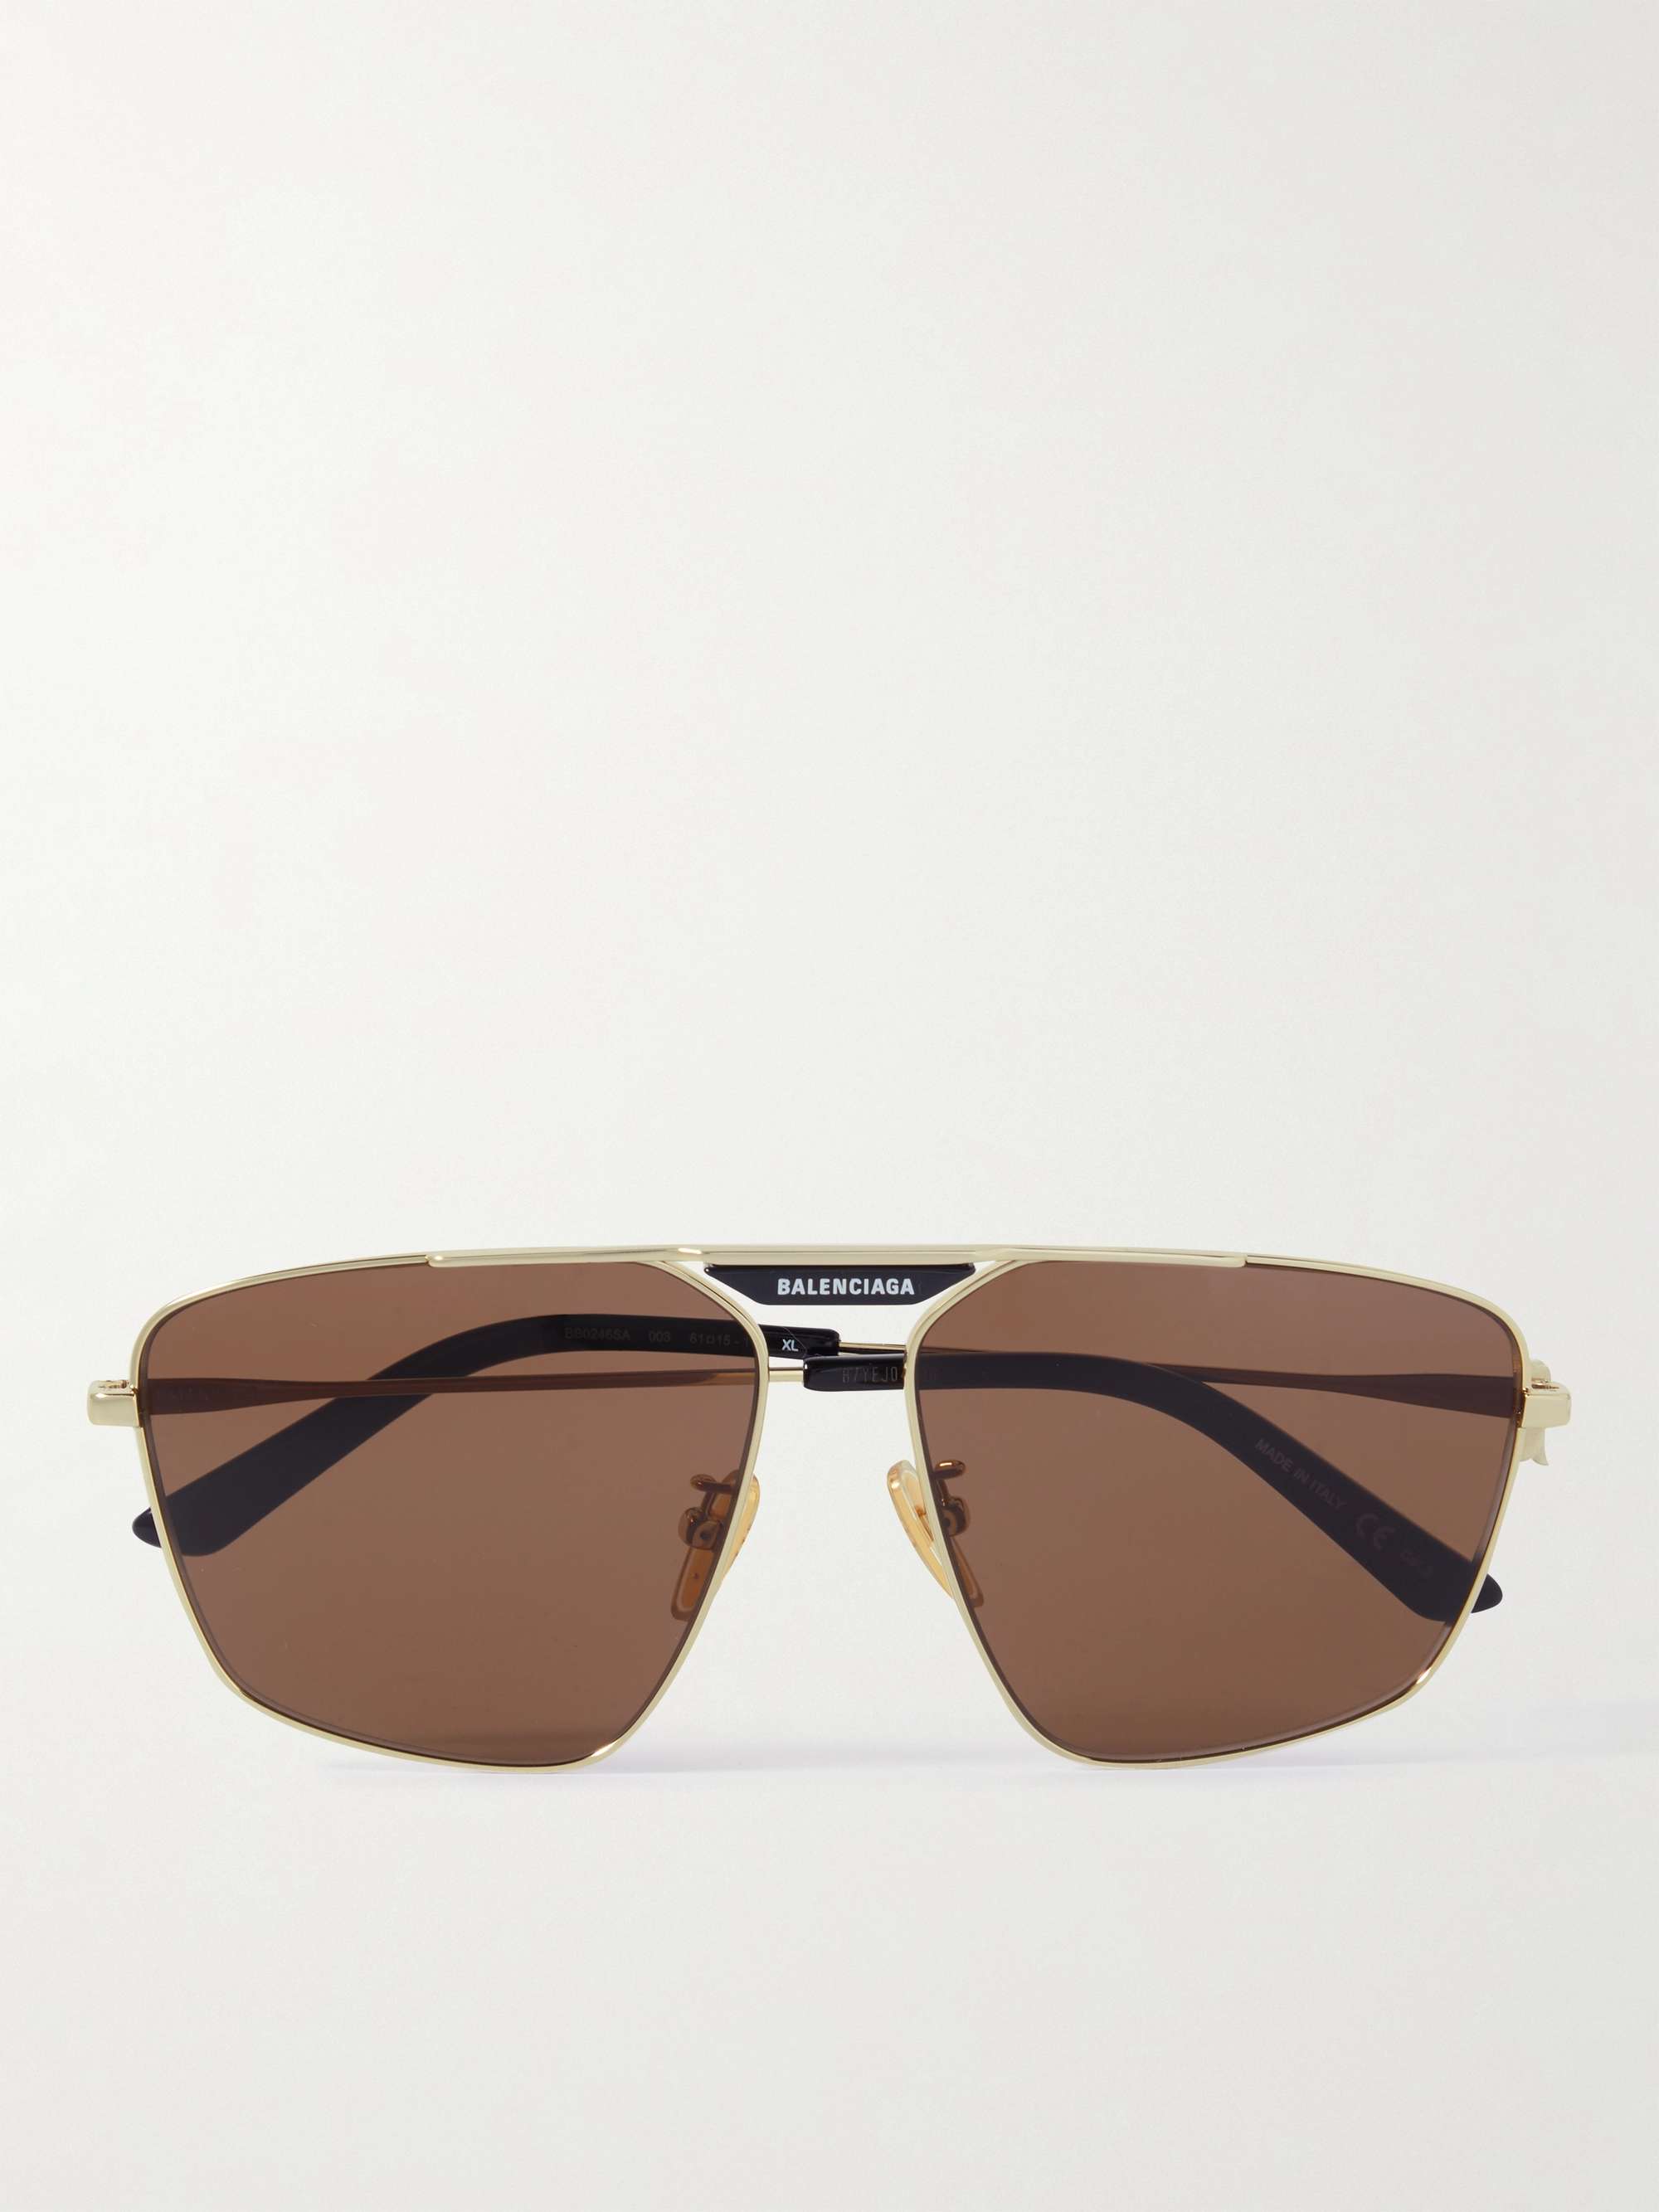 BALENCIAGA EYEWEAR Aviator-Style Gold-Tone Sunglasses | MR PORTER